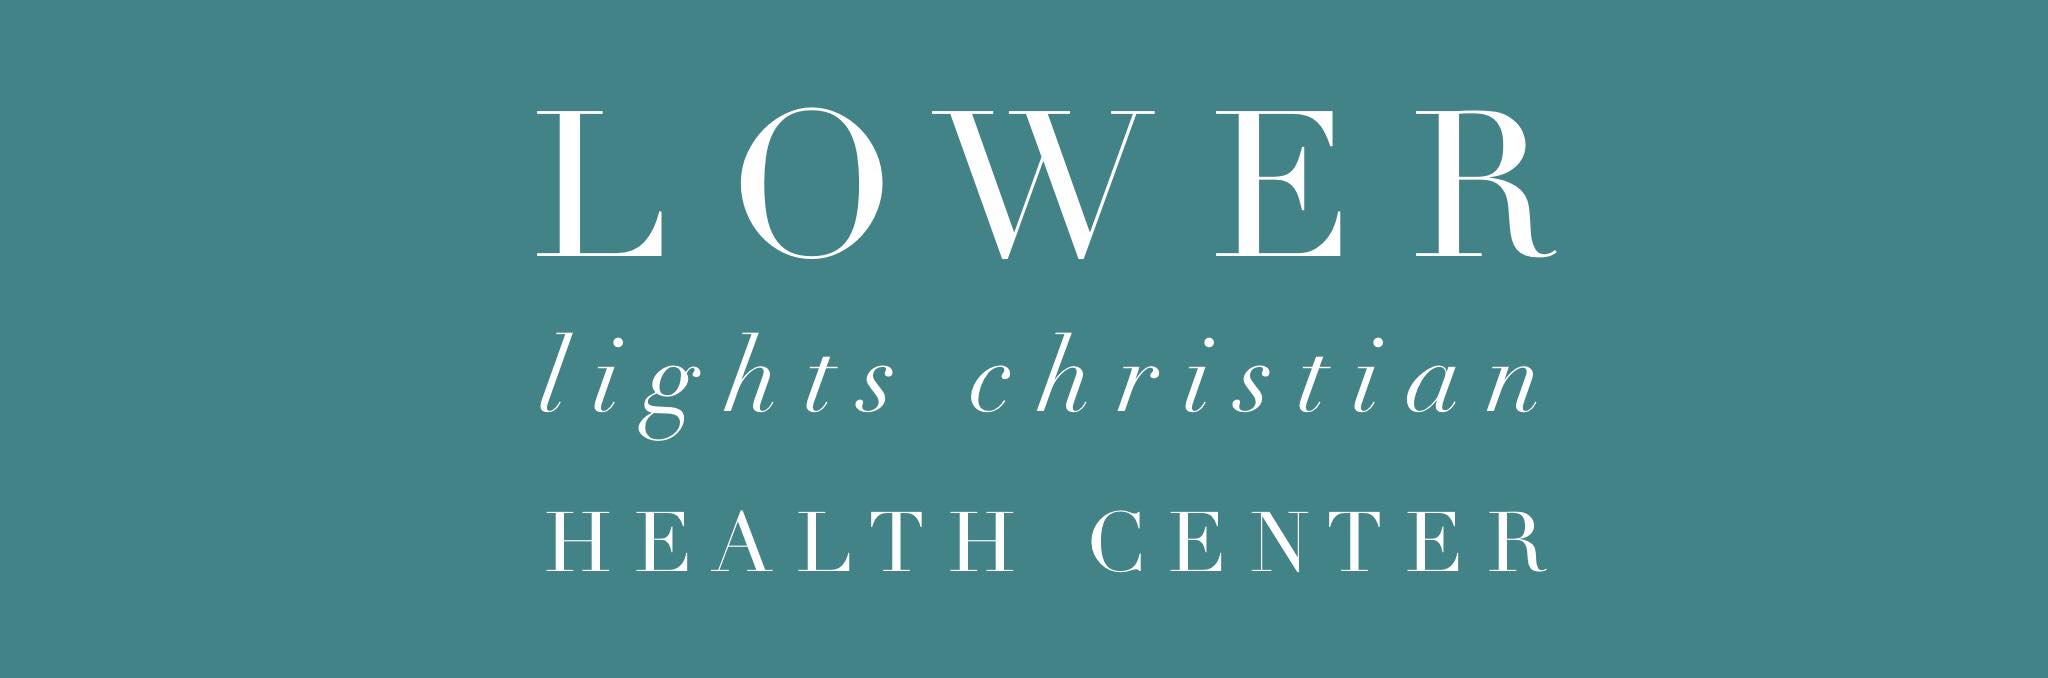 LOWER LIGHTS CHRISTIAN HEALTH CENTER